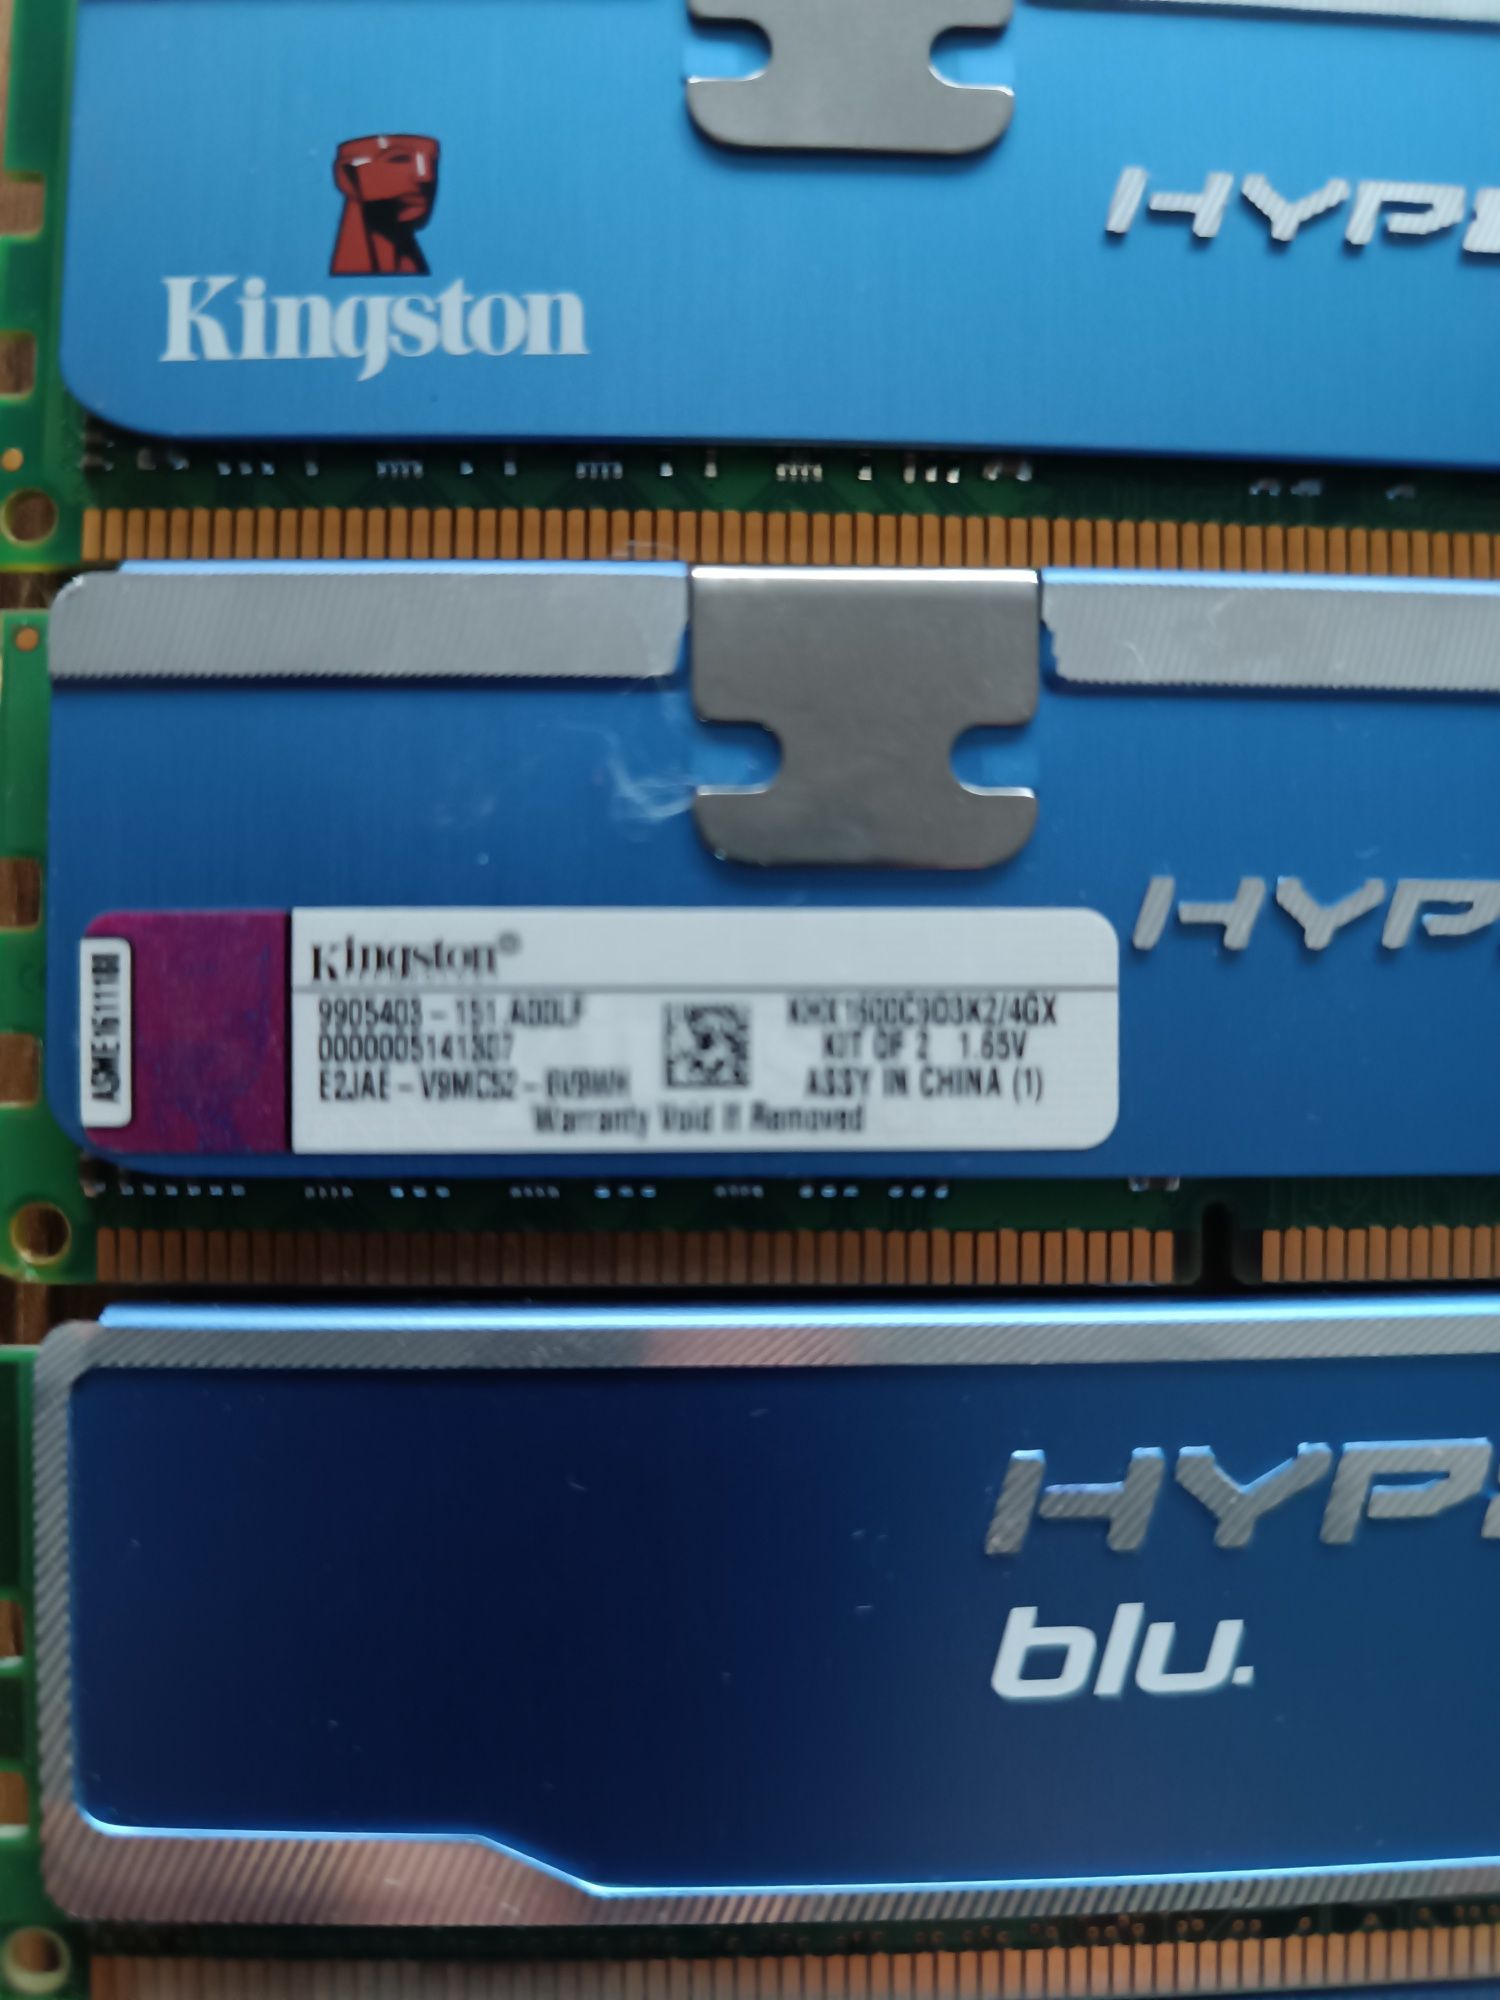 DDR 3 Hyper X Kingston 1600C9 12Gb